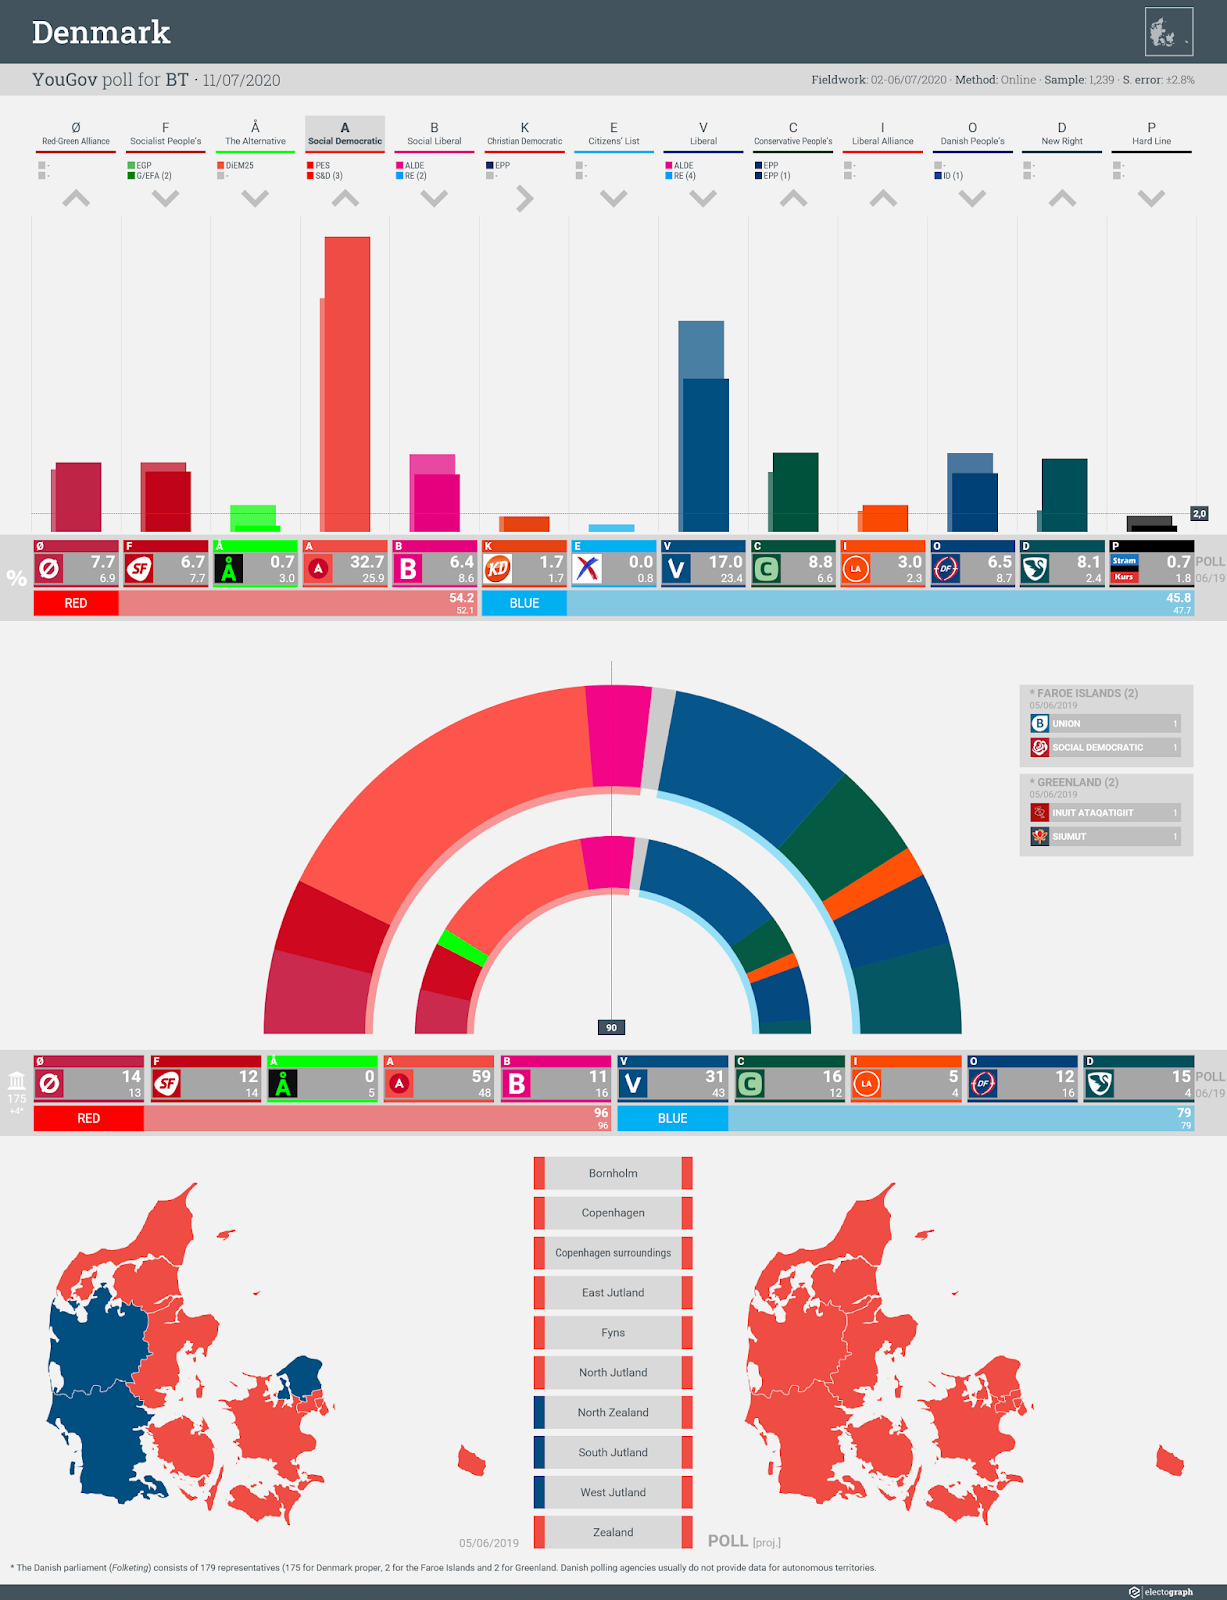 DENMARK: YouGov poll chart for BT, 11 July 2020